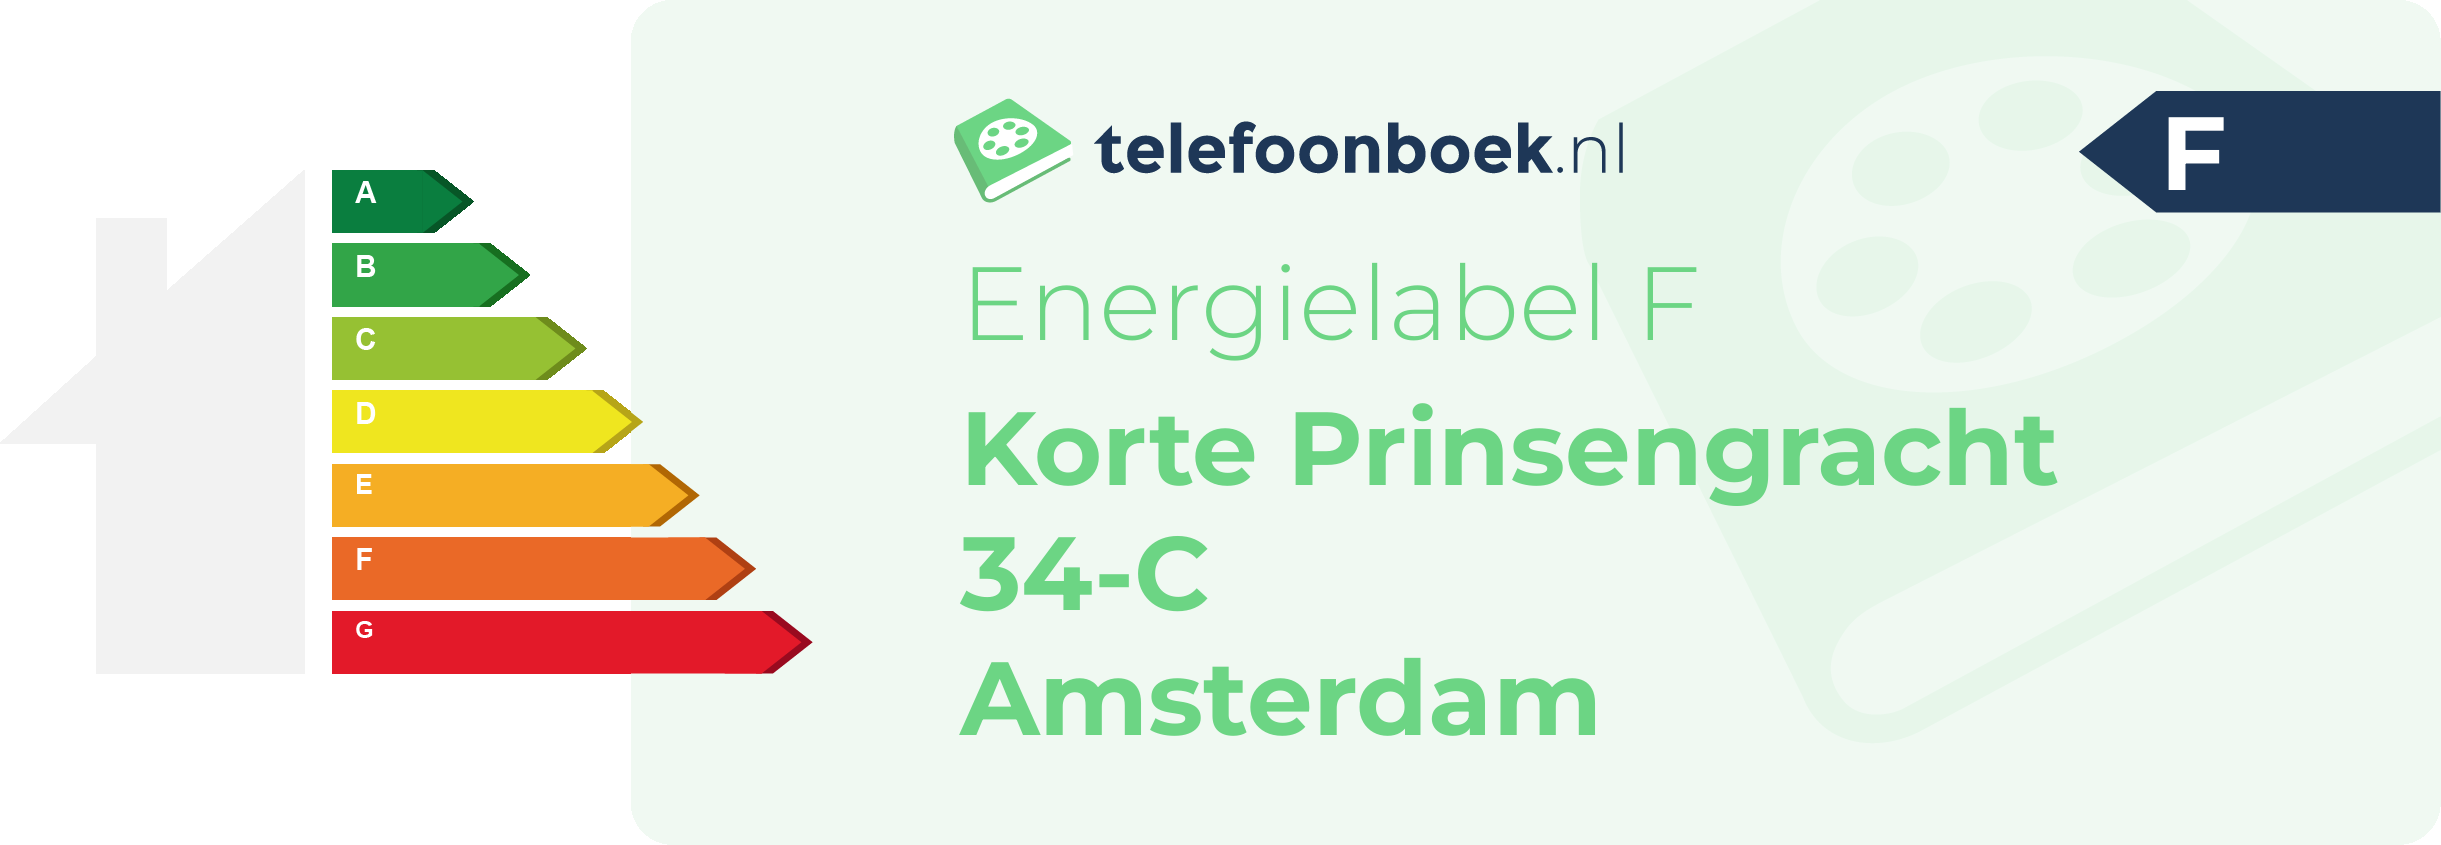 Energielabel Korte Prinsengracht 34-C Amsterdam